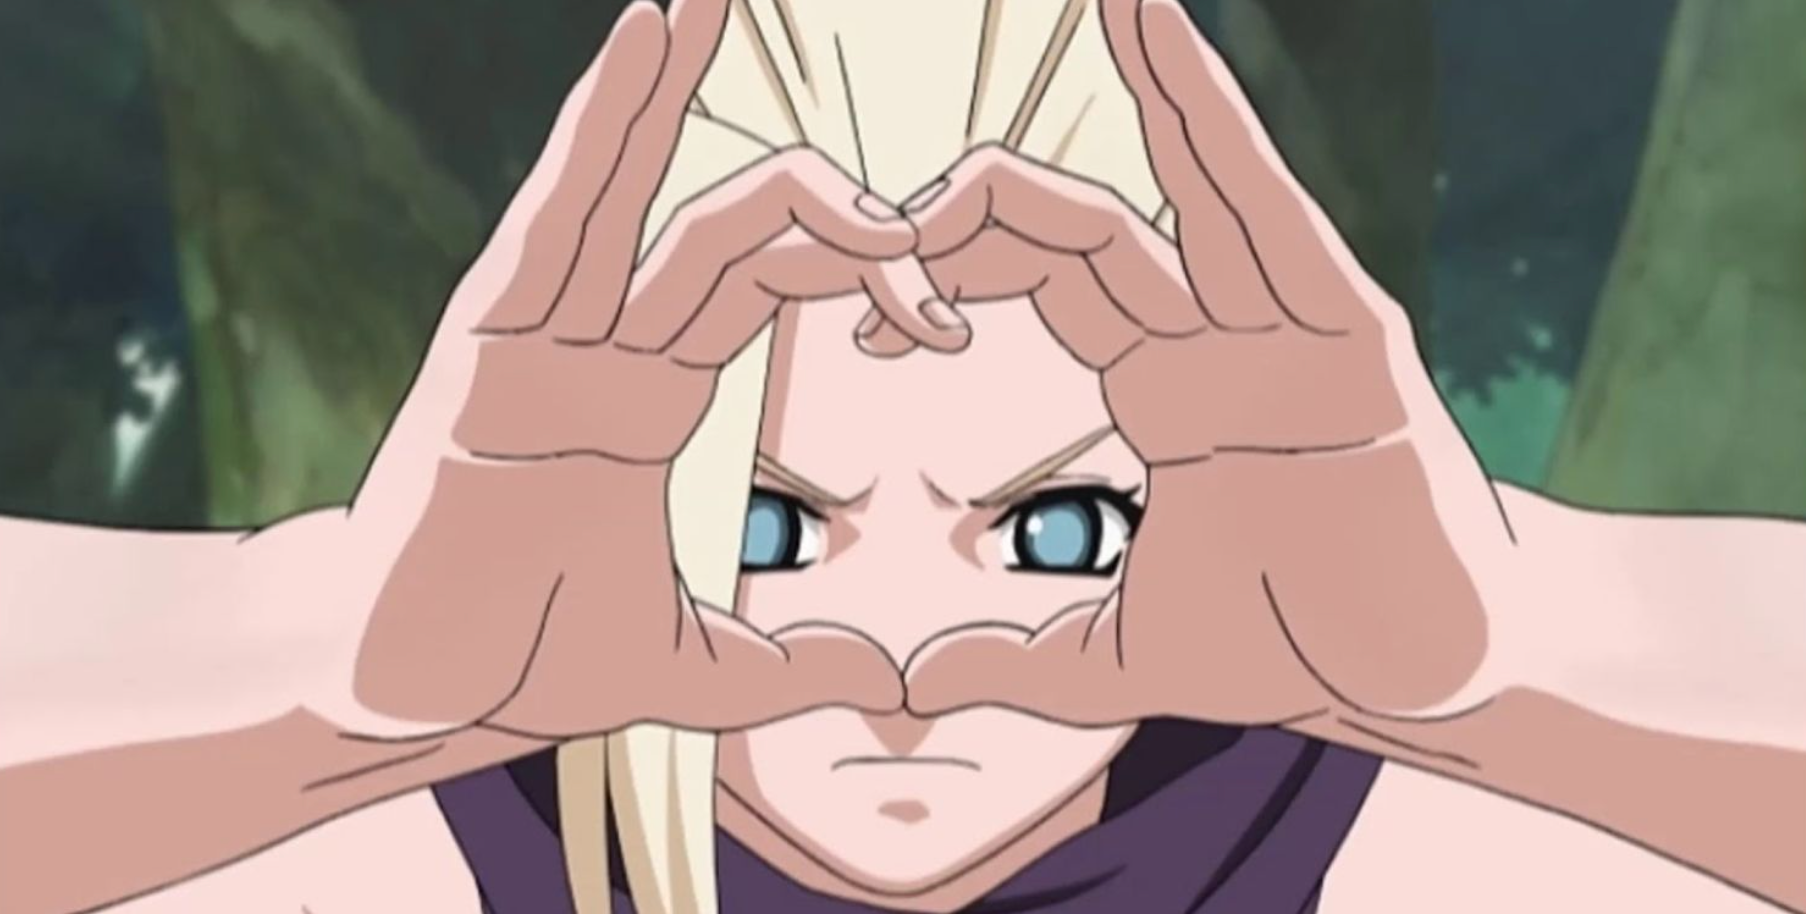 Ino hand sign in Naruto